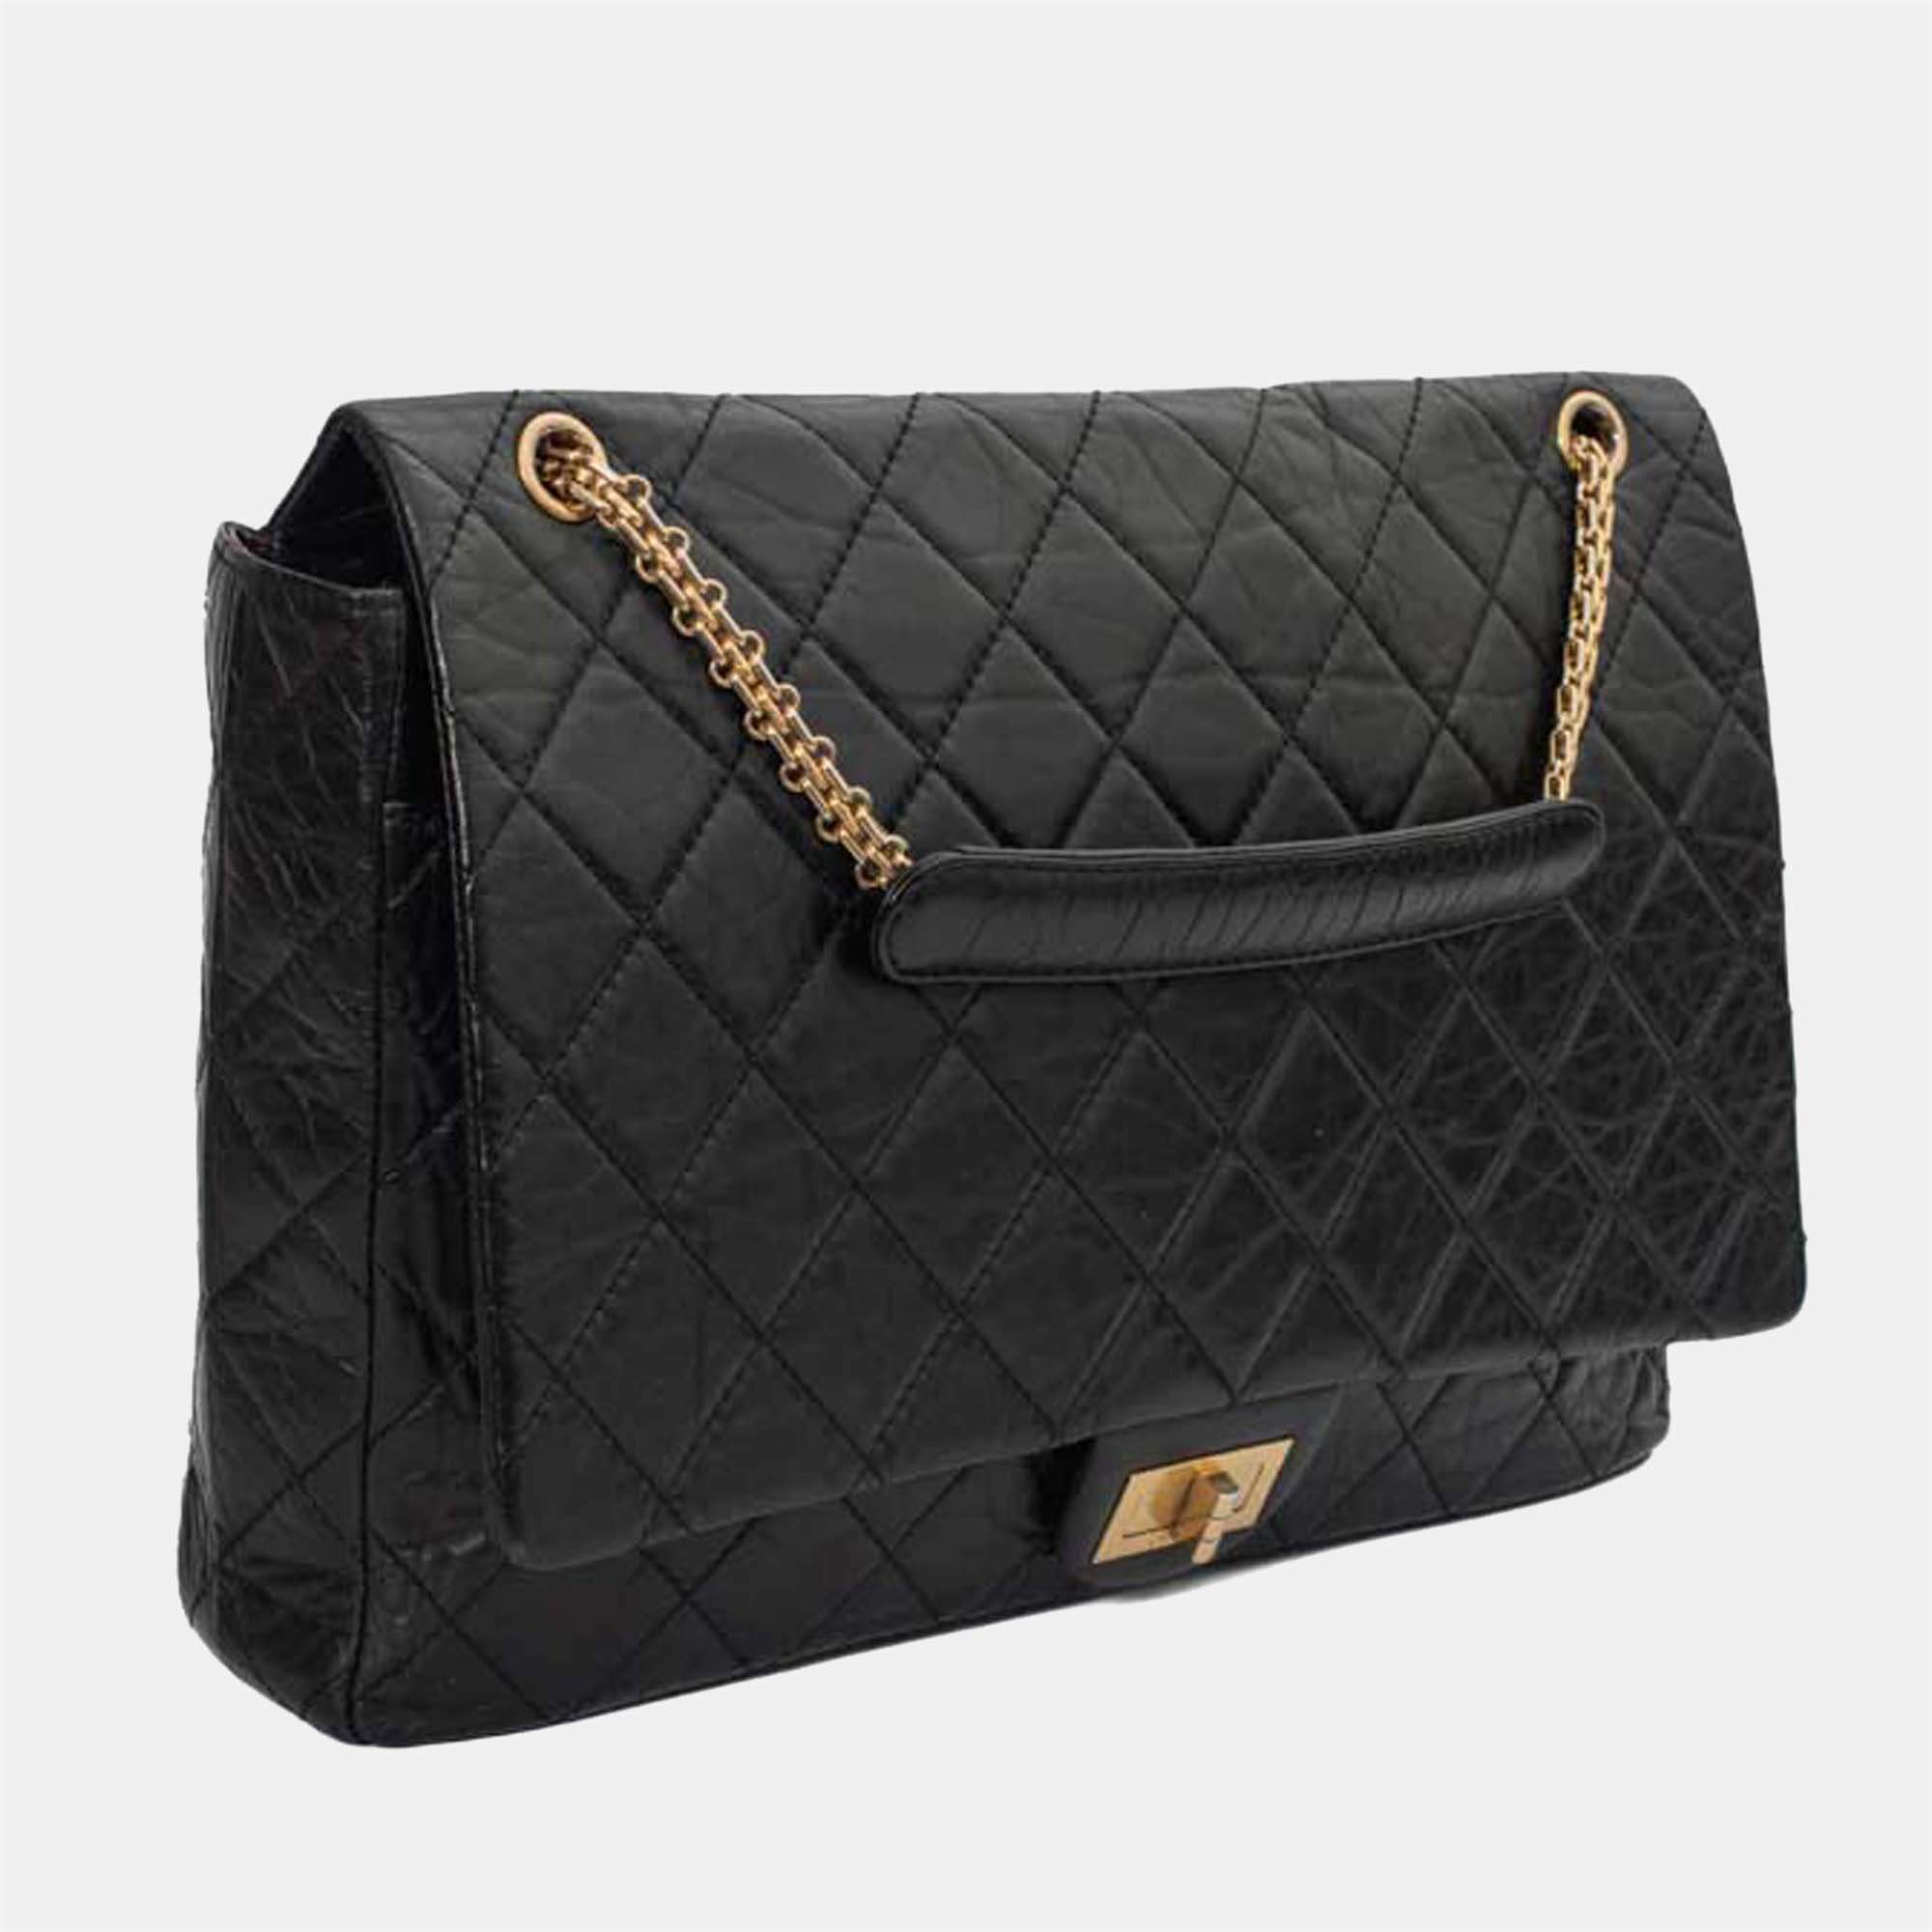 Chanel Black Leather Maxi Jumbo reissue 2.55 Flap bag